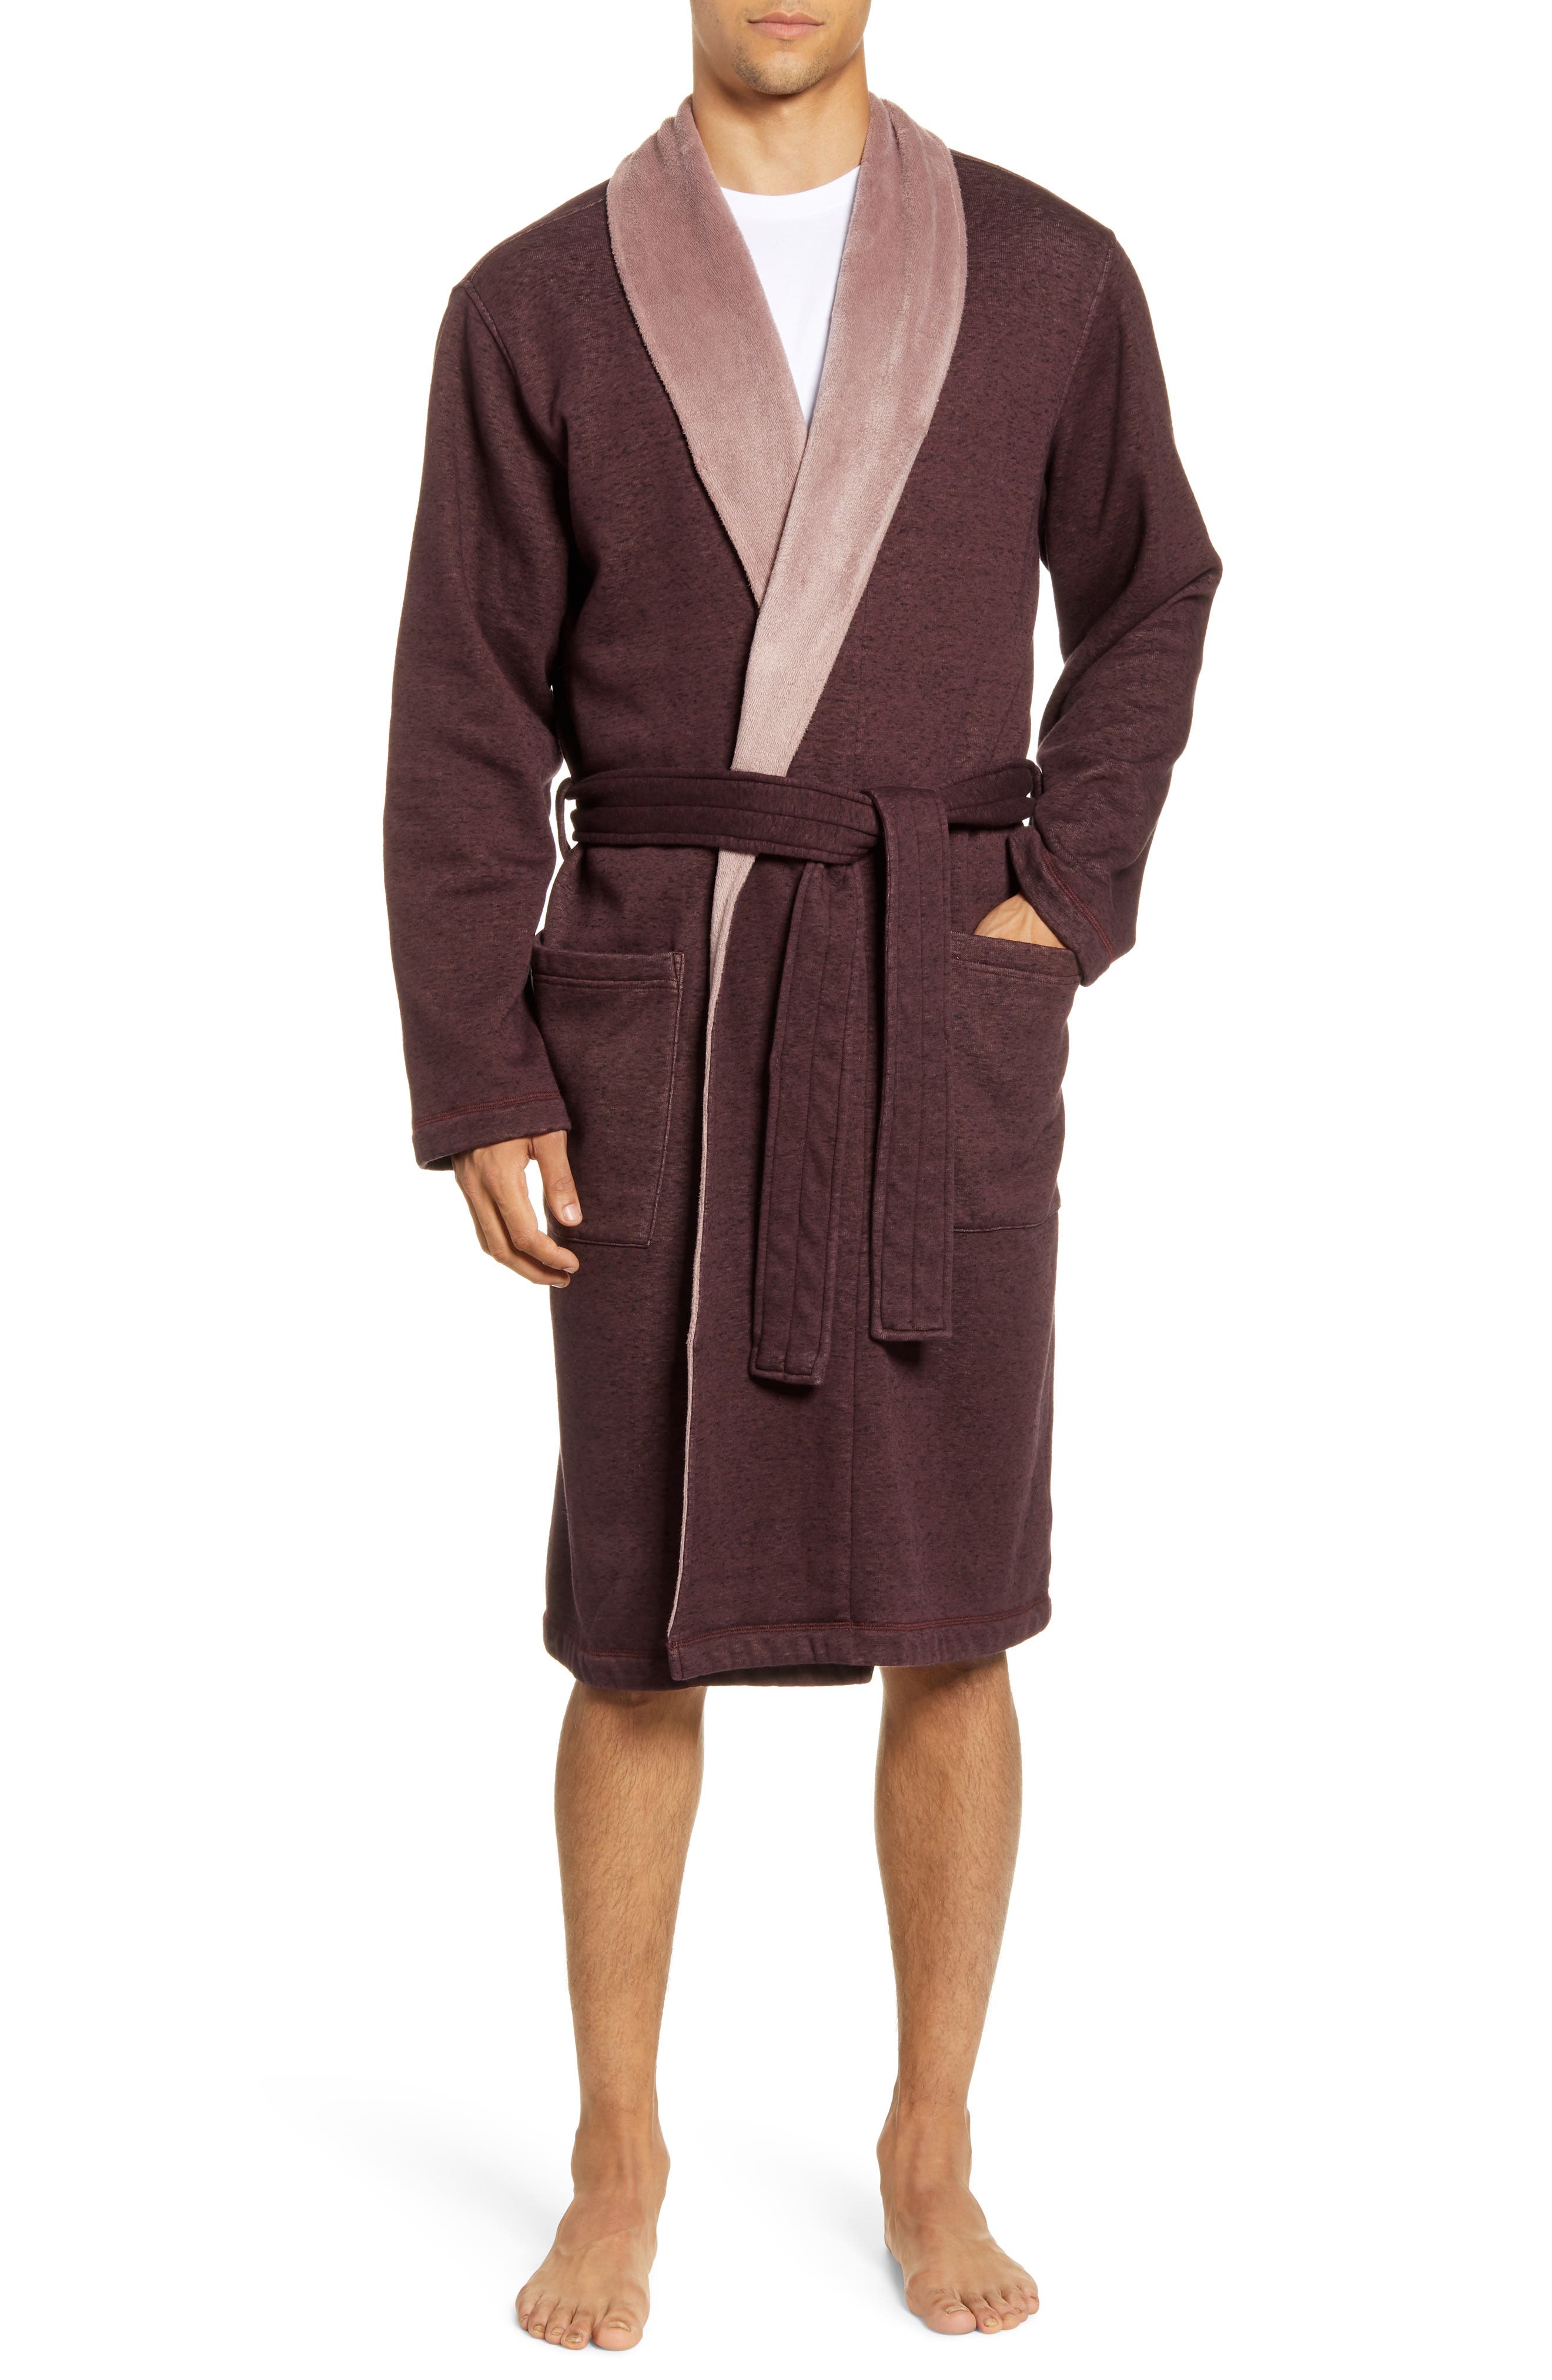 ugg bathrobe nordstrom